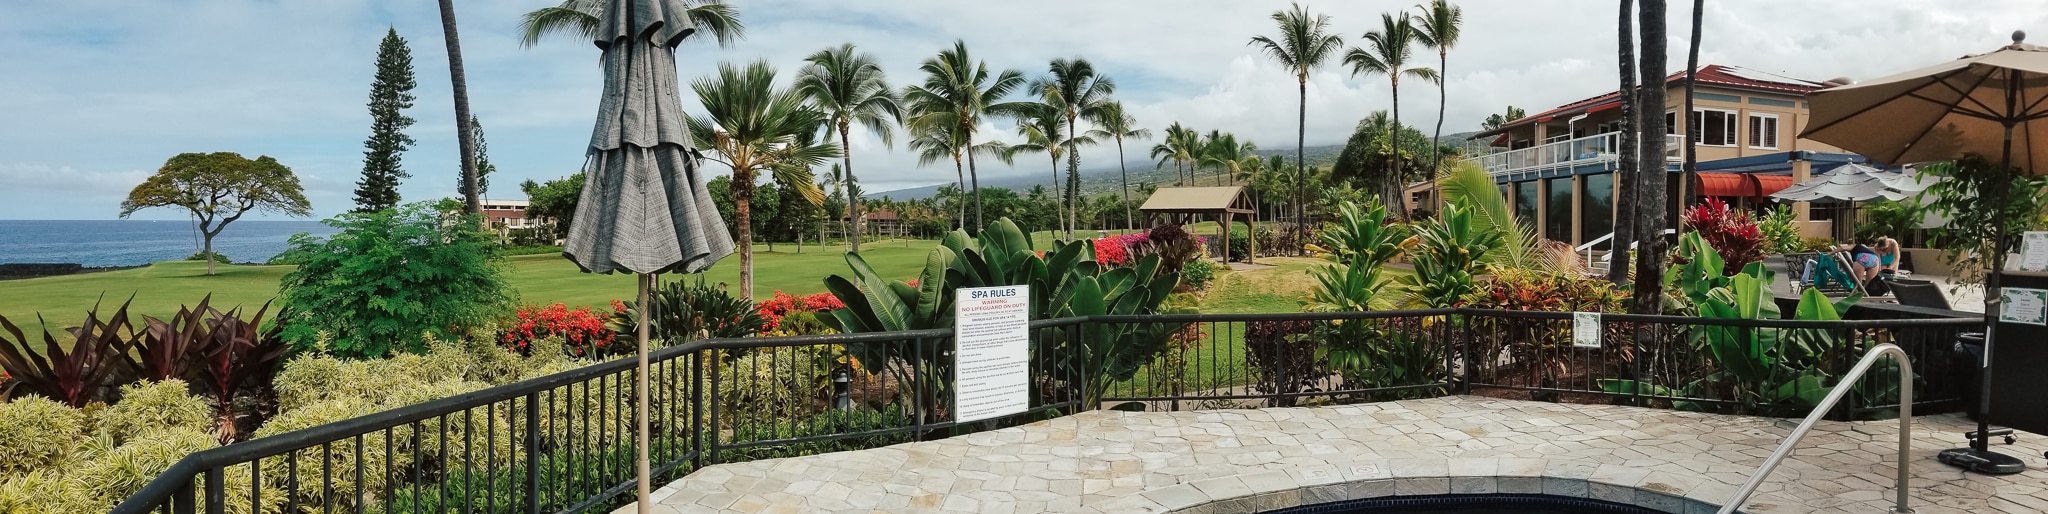 adventurous paradise vacation kailua kona resort